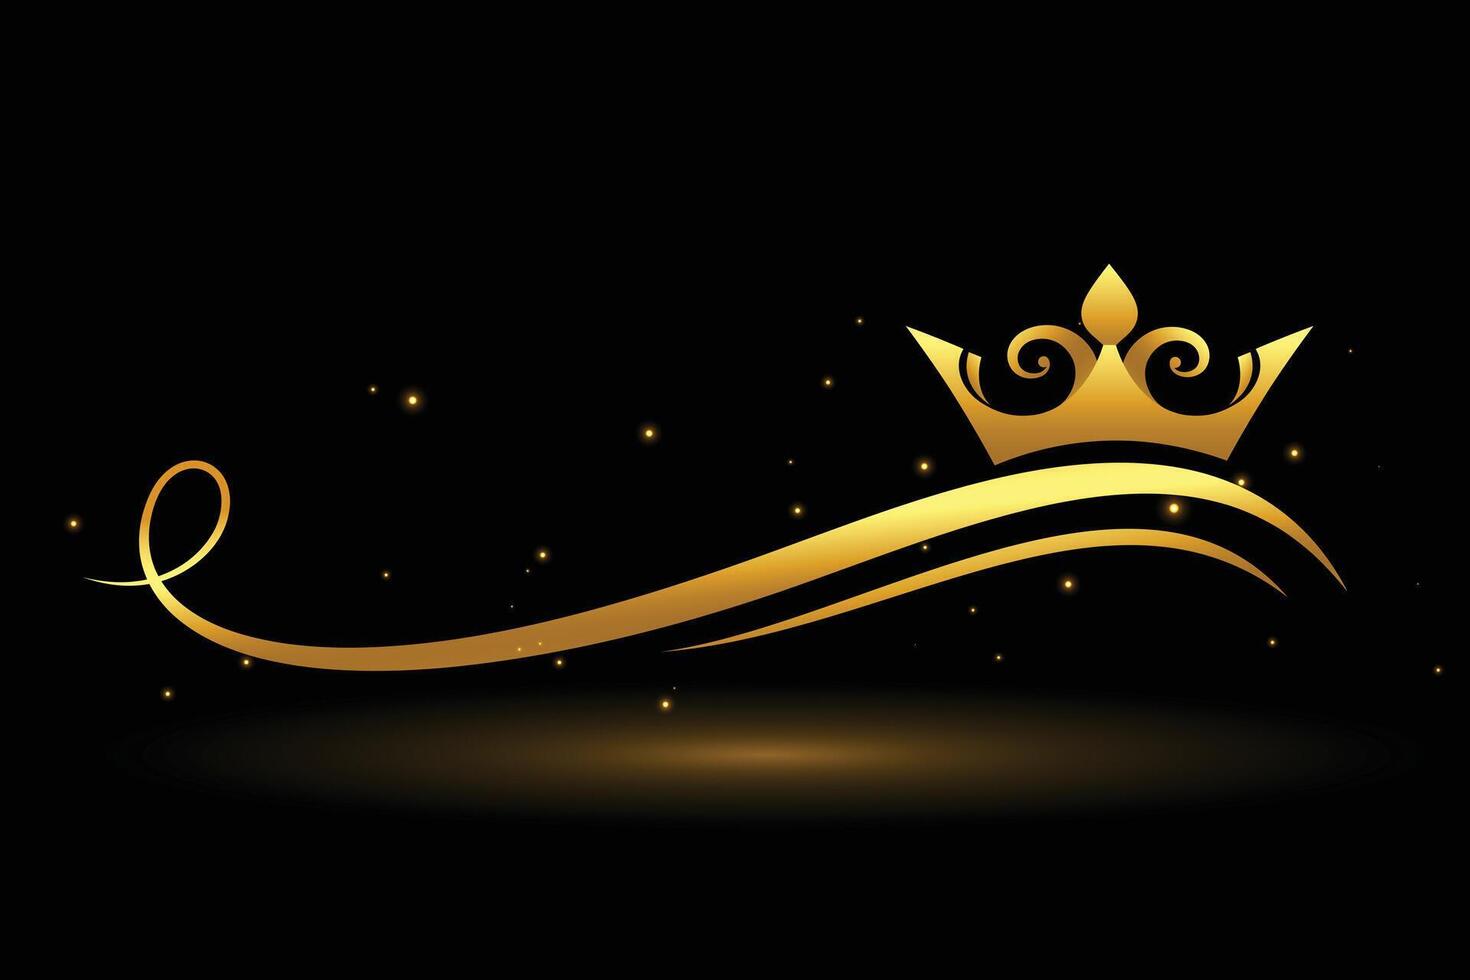 shiny golden crown background for royal treasure design vector